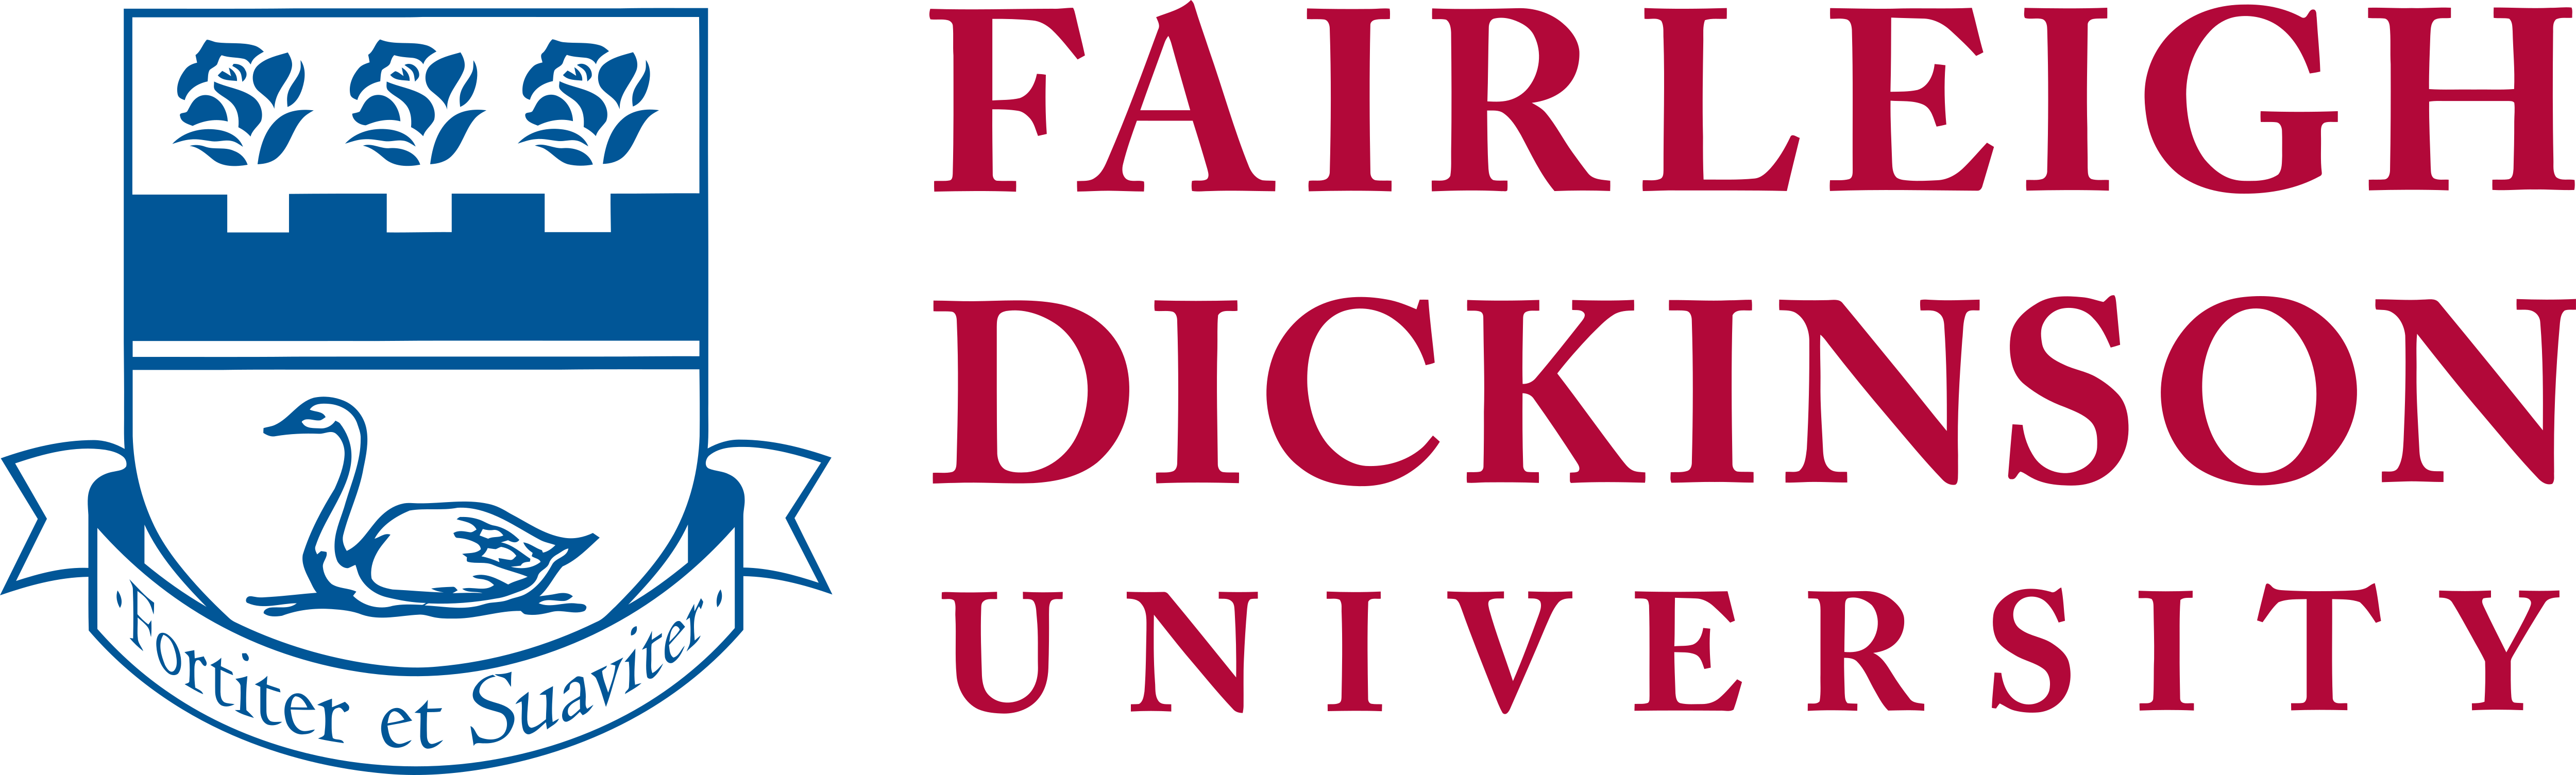 Fairleigh Dickinson University logo